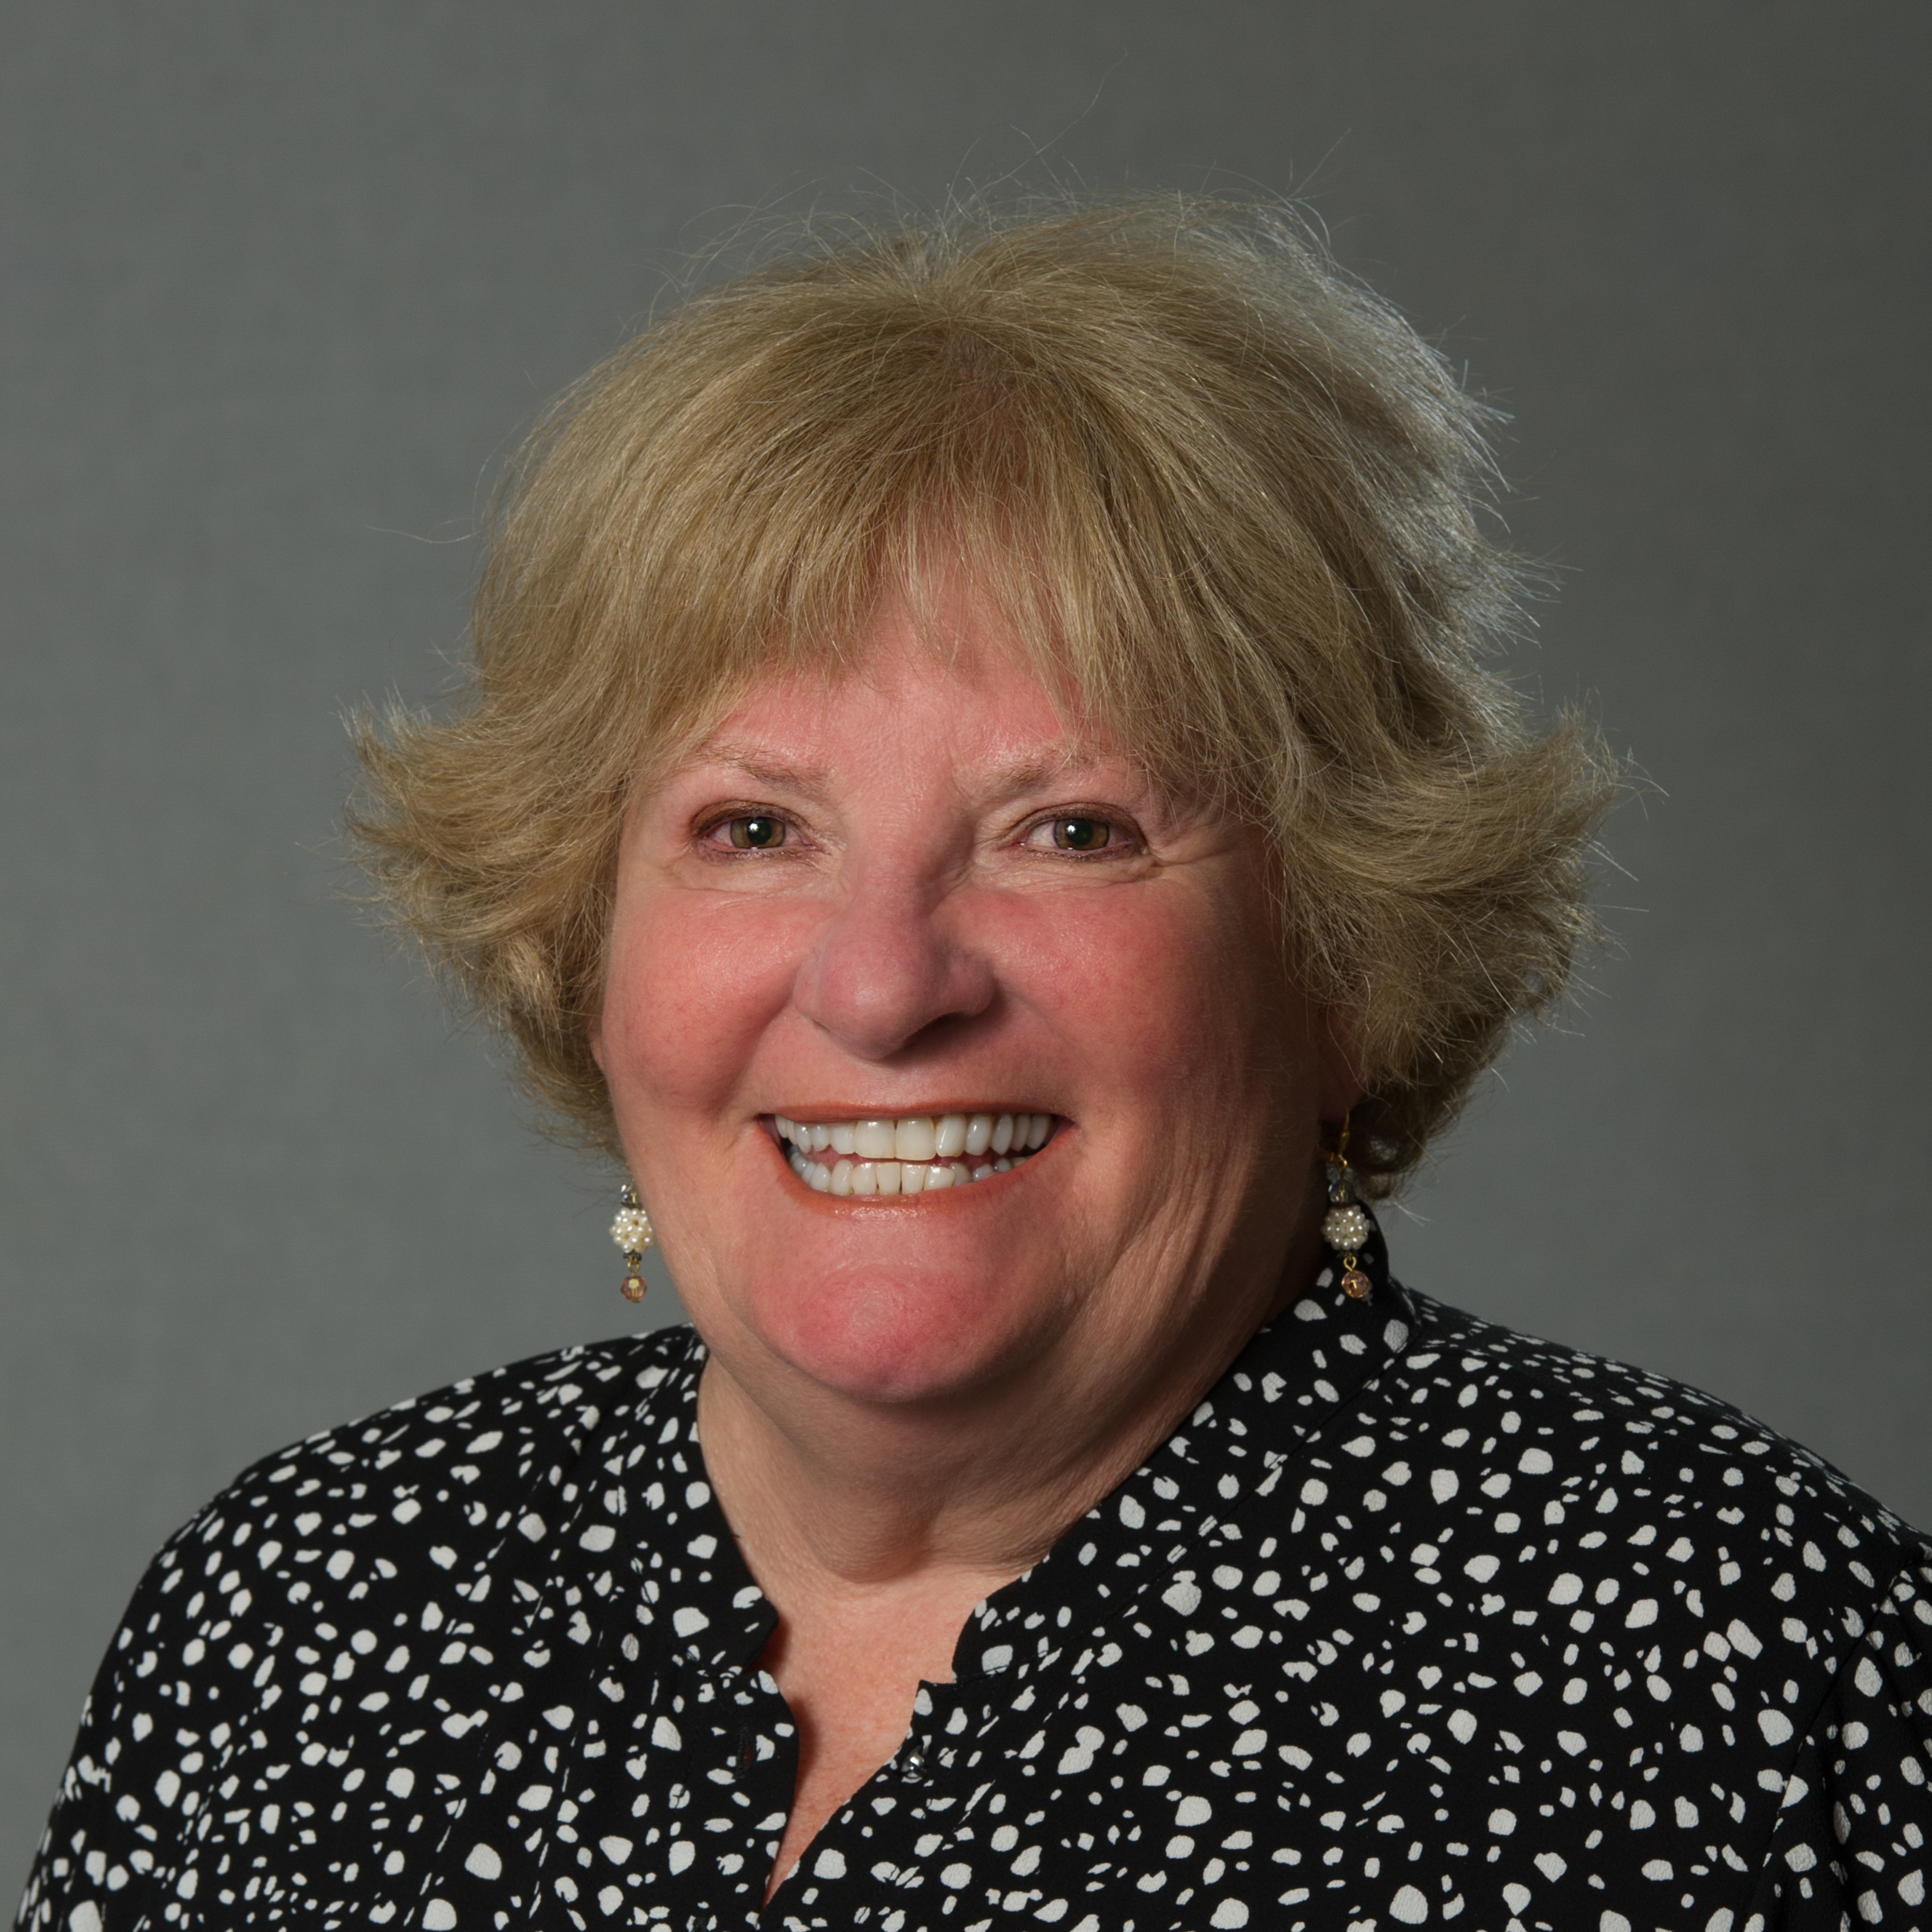 Headshot of Patricia Hassard wearing a polka dot blouse